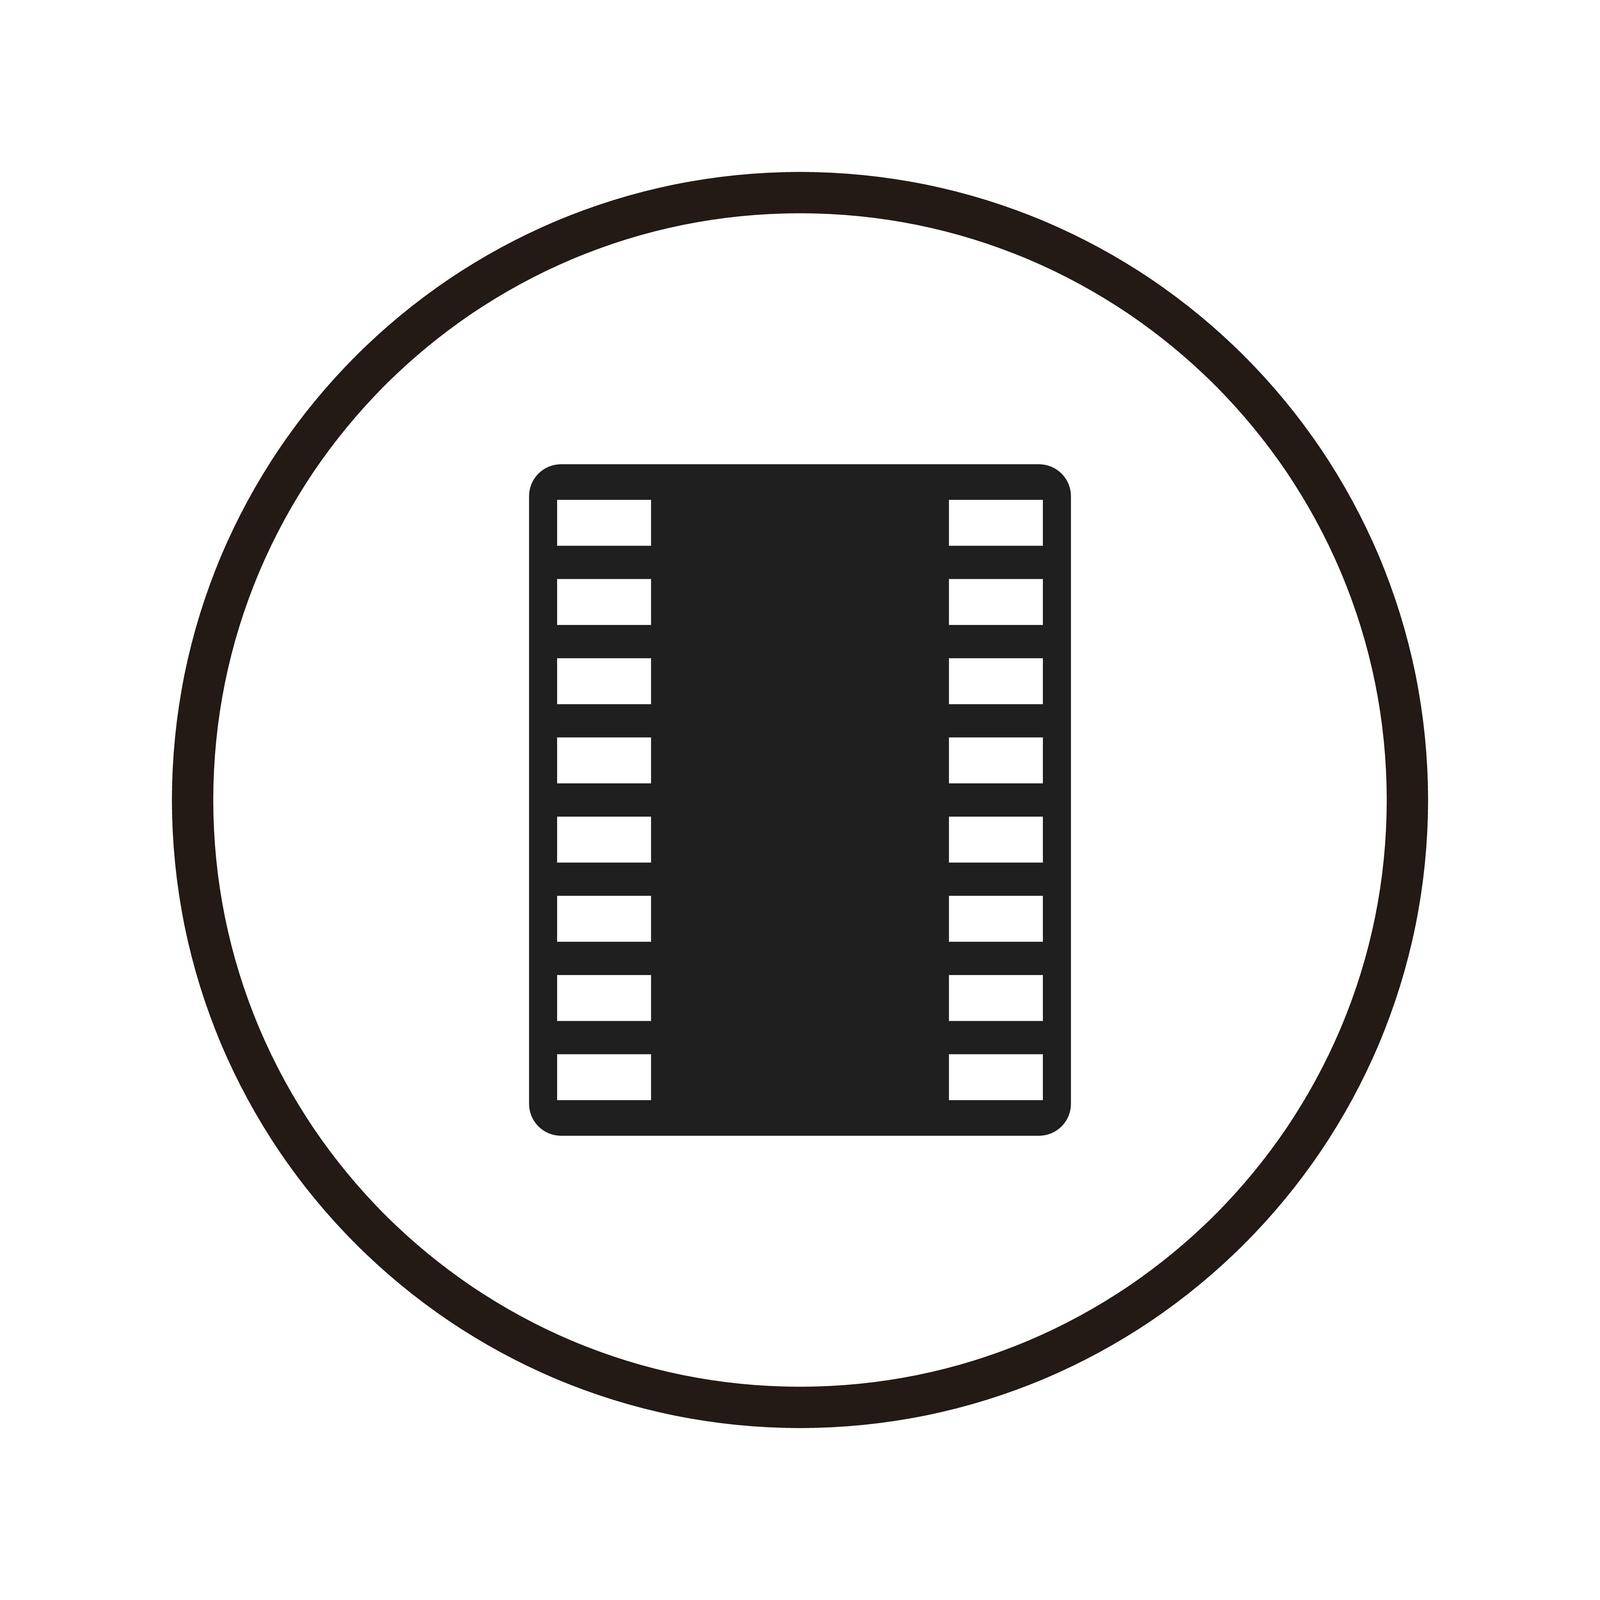 Film icon. Film tapes. Editable vectors.